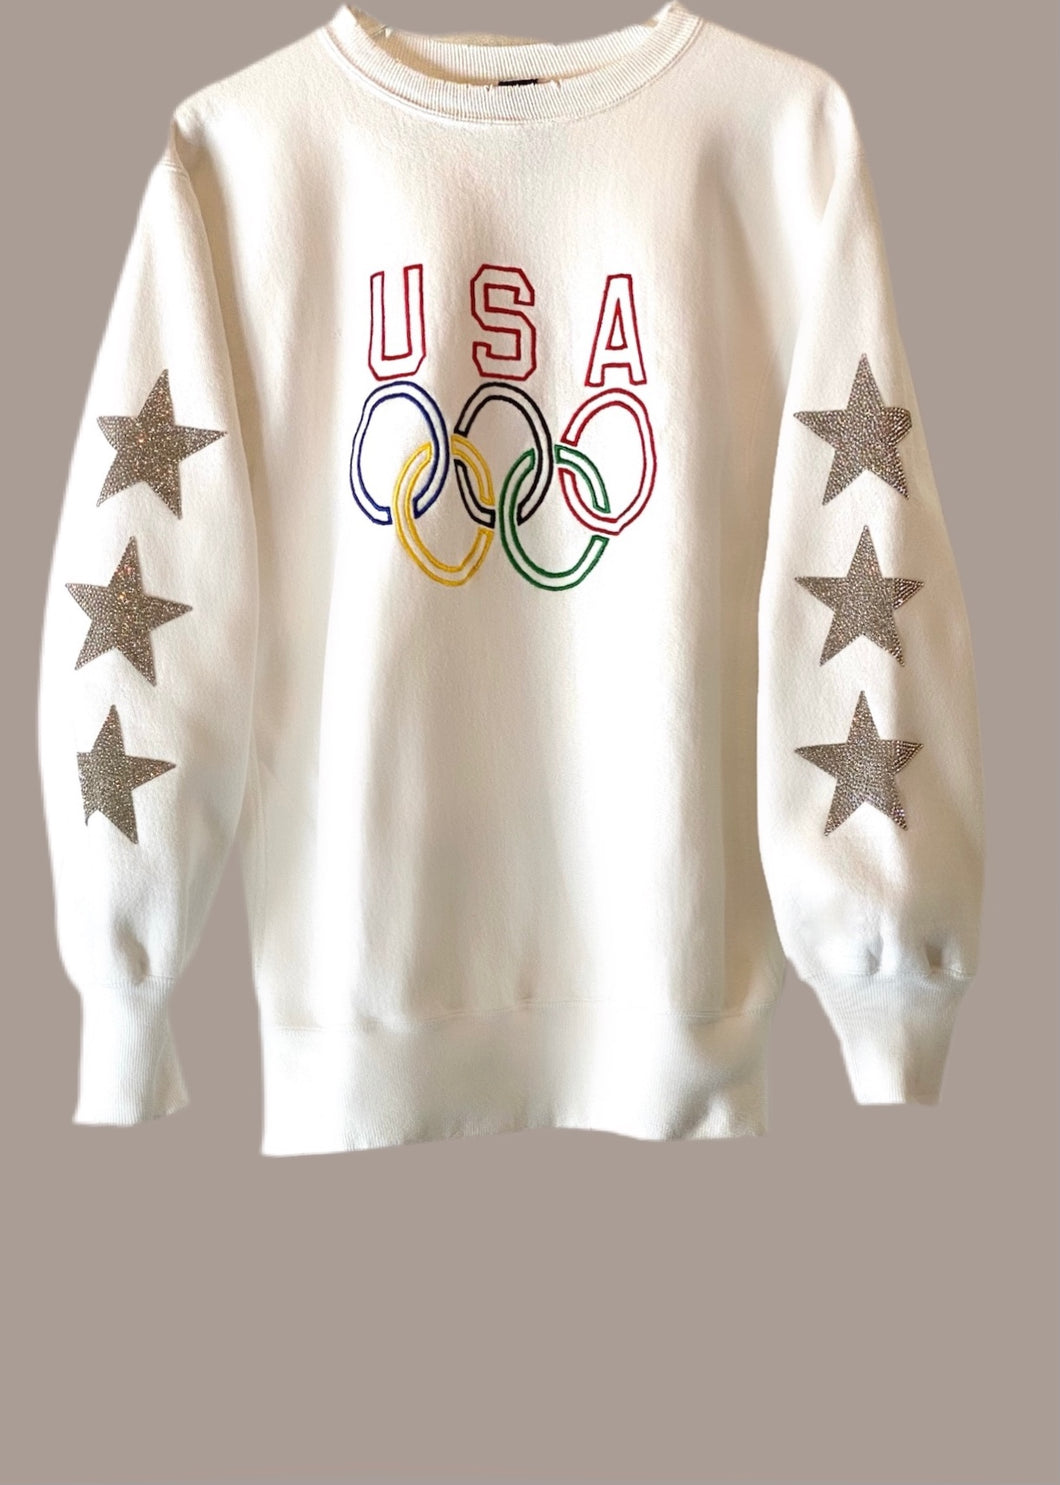 USA Olympics, One of a KIND Vintage Sweatshirt with Three Crystal Star Design